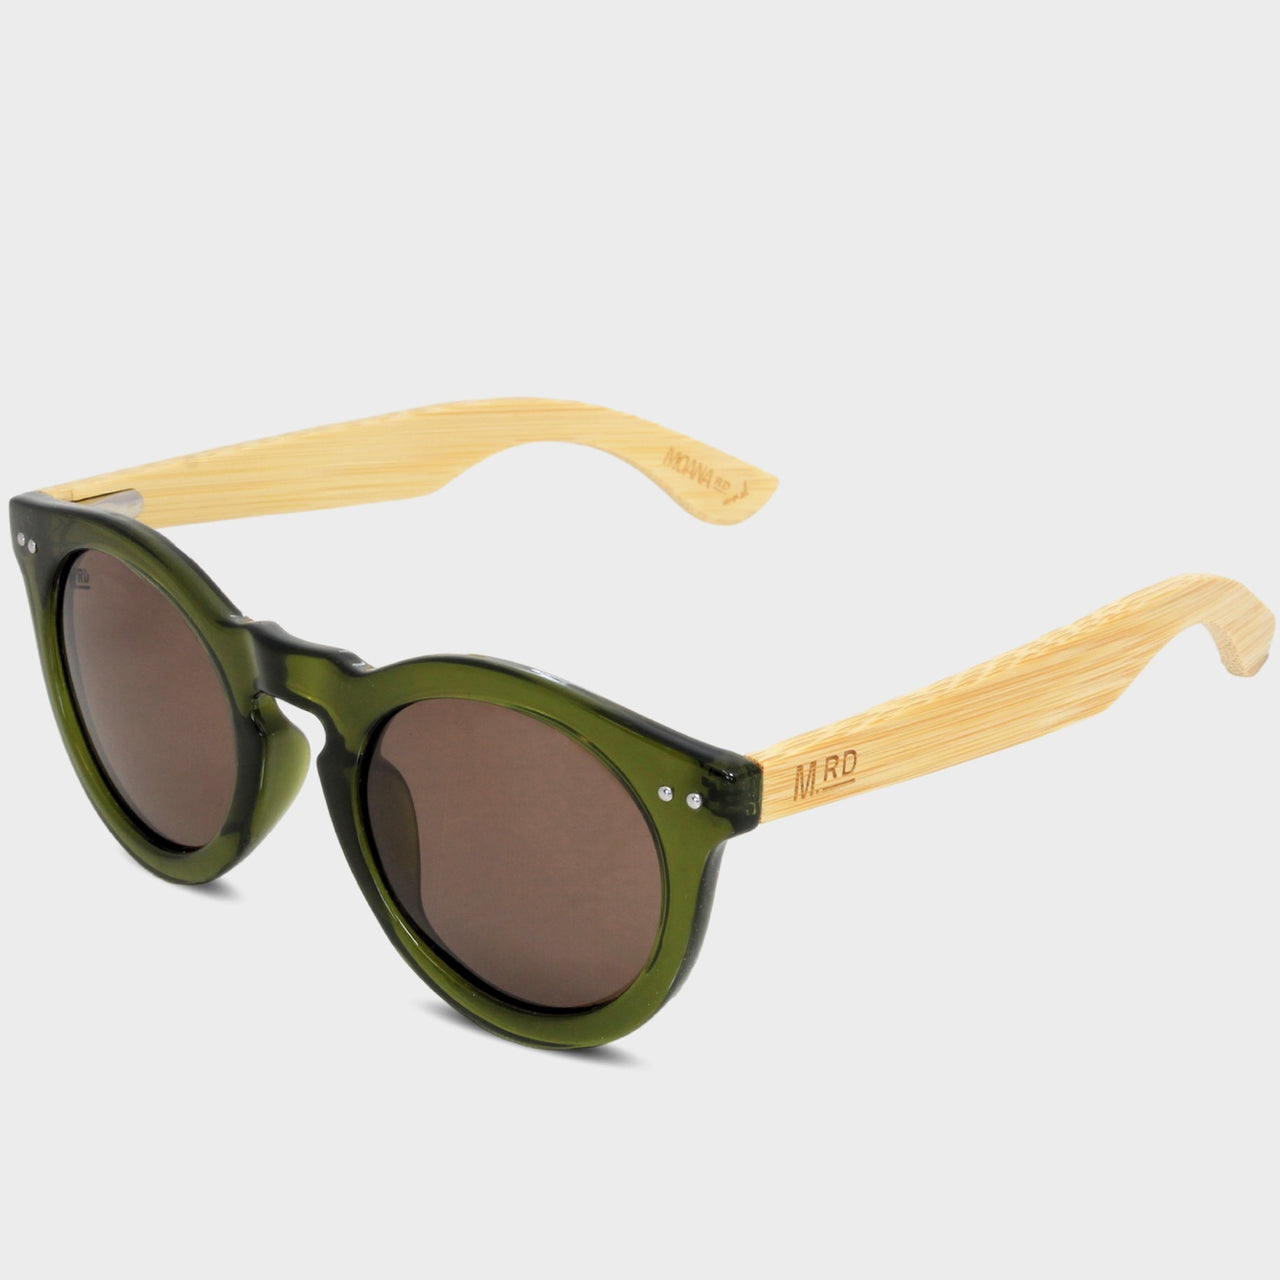 Moana Road Grace Kelly Sunglasses - Assorted